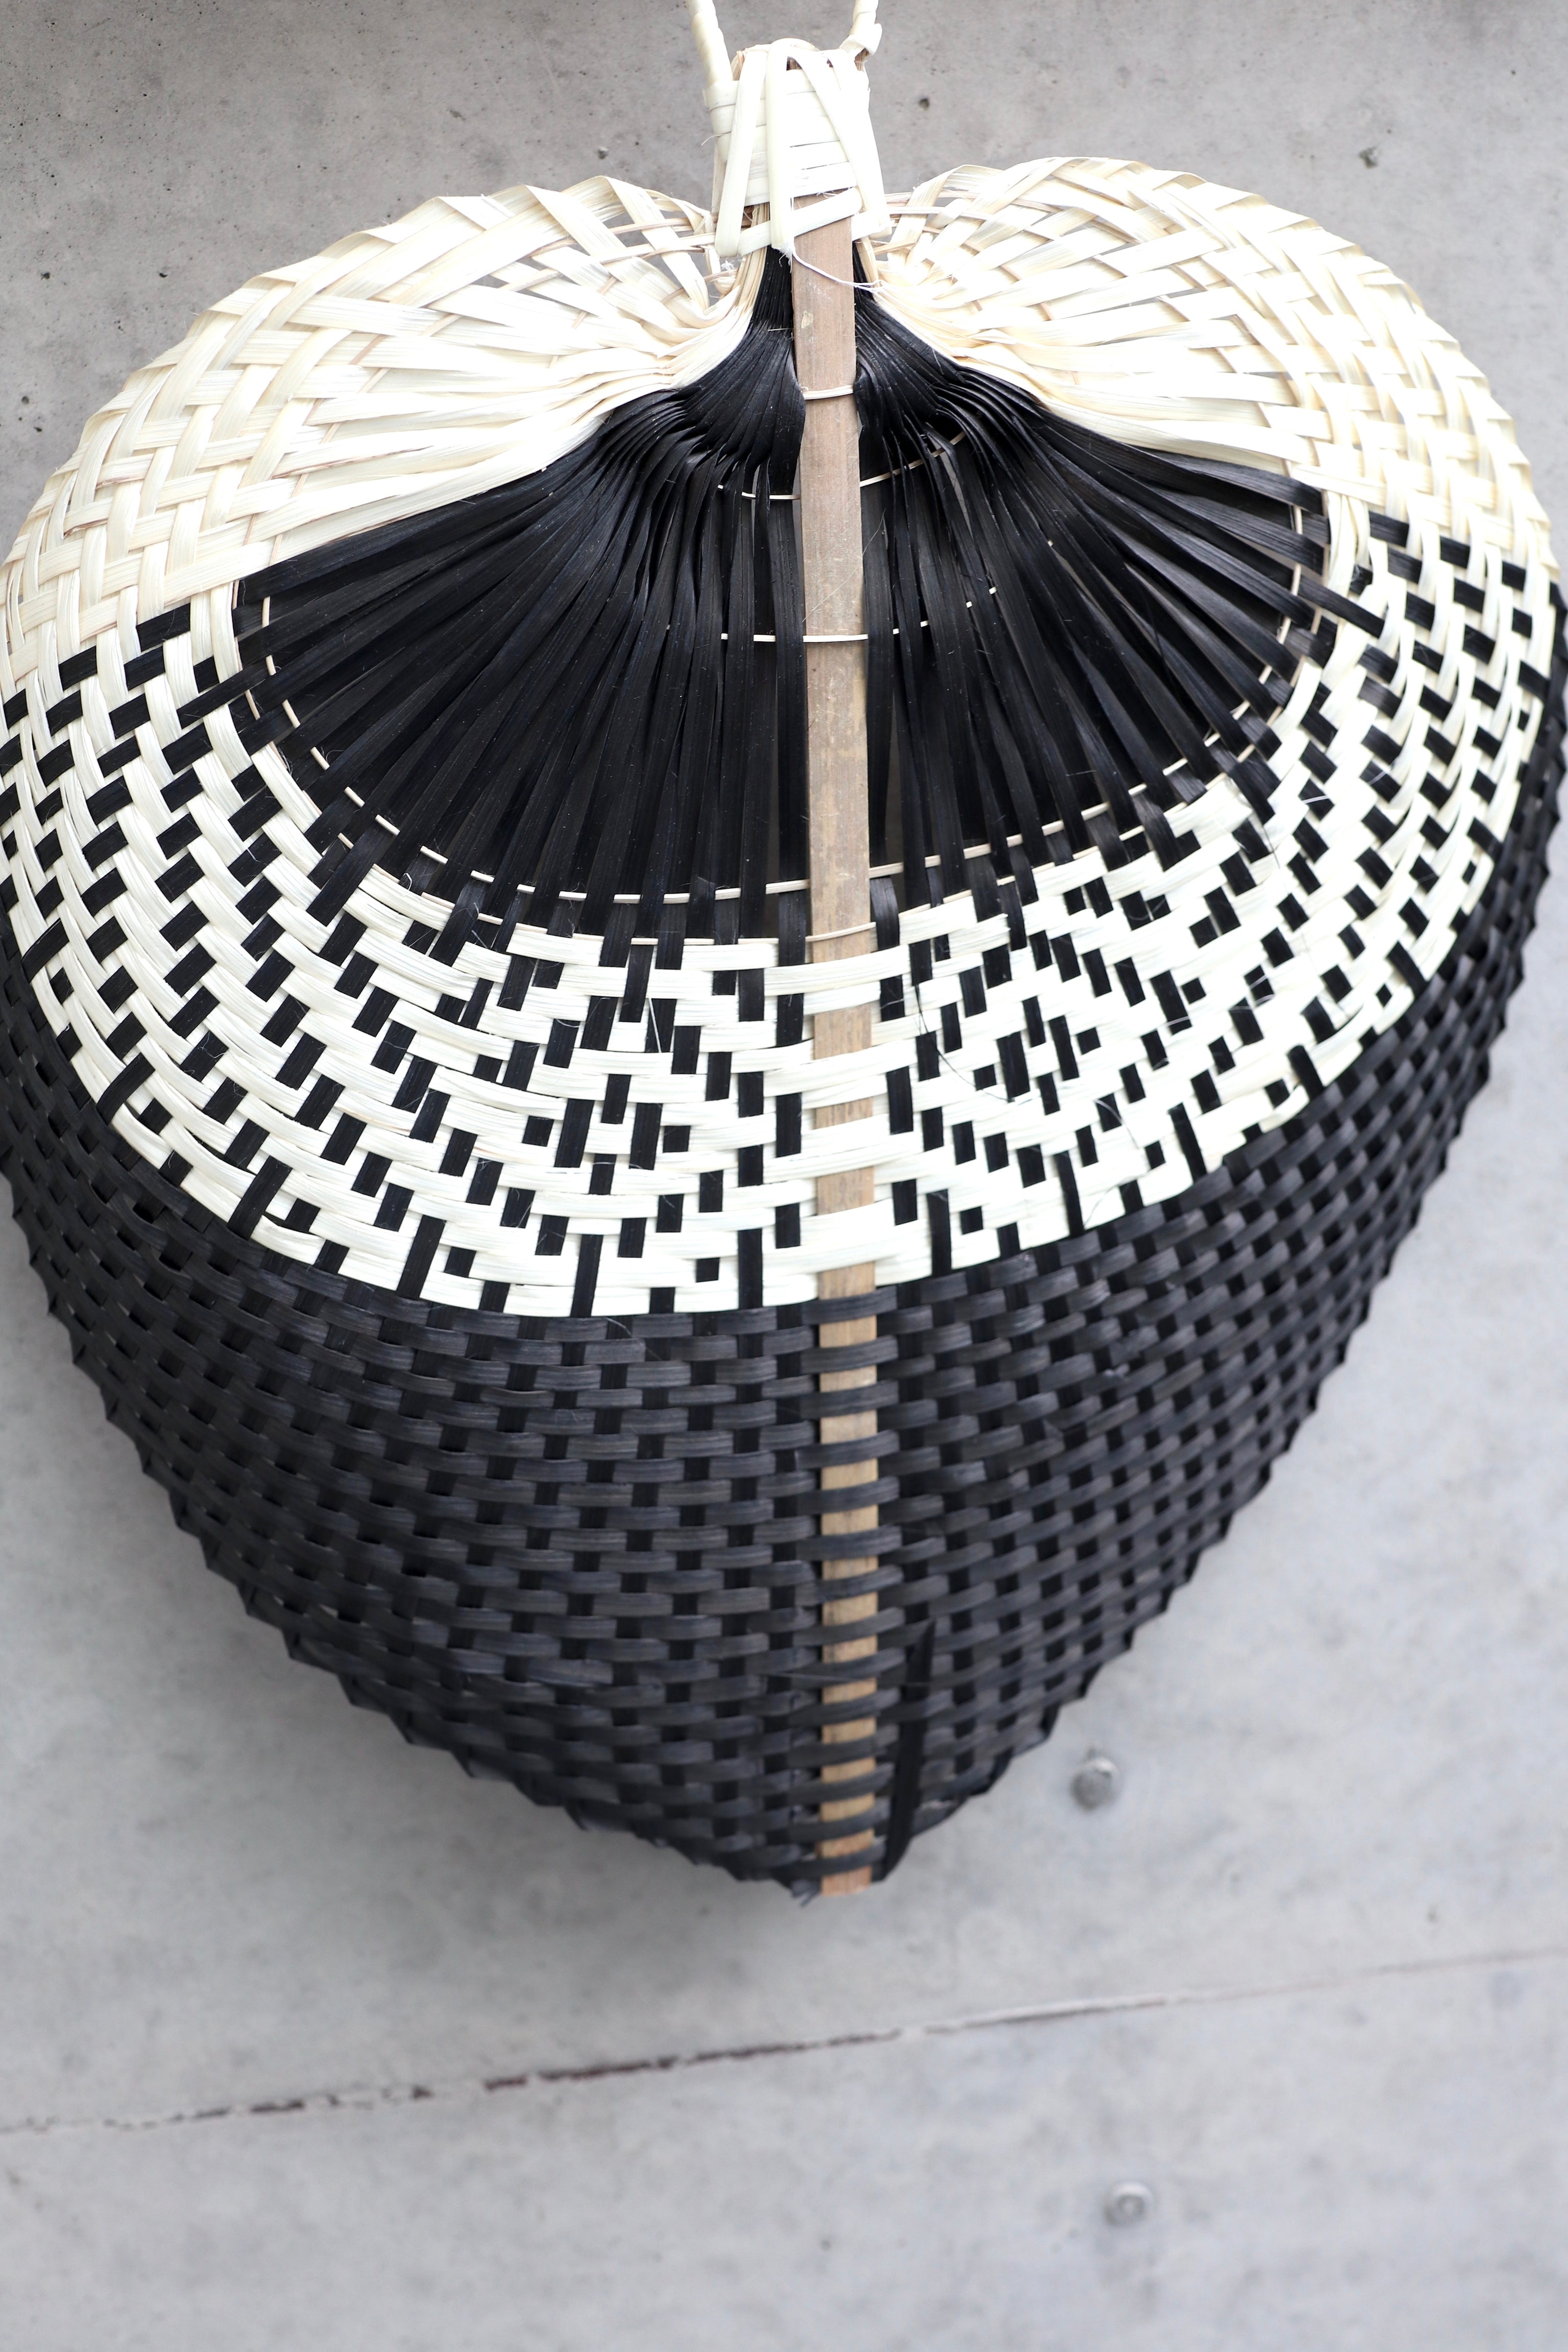 Hand-woven bamboo fan